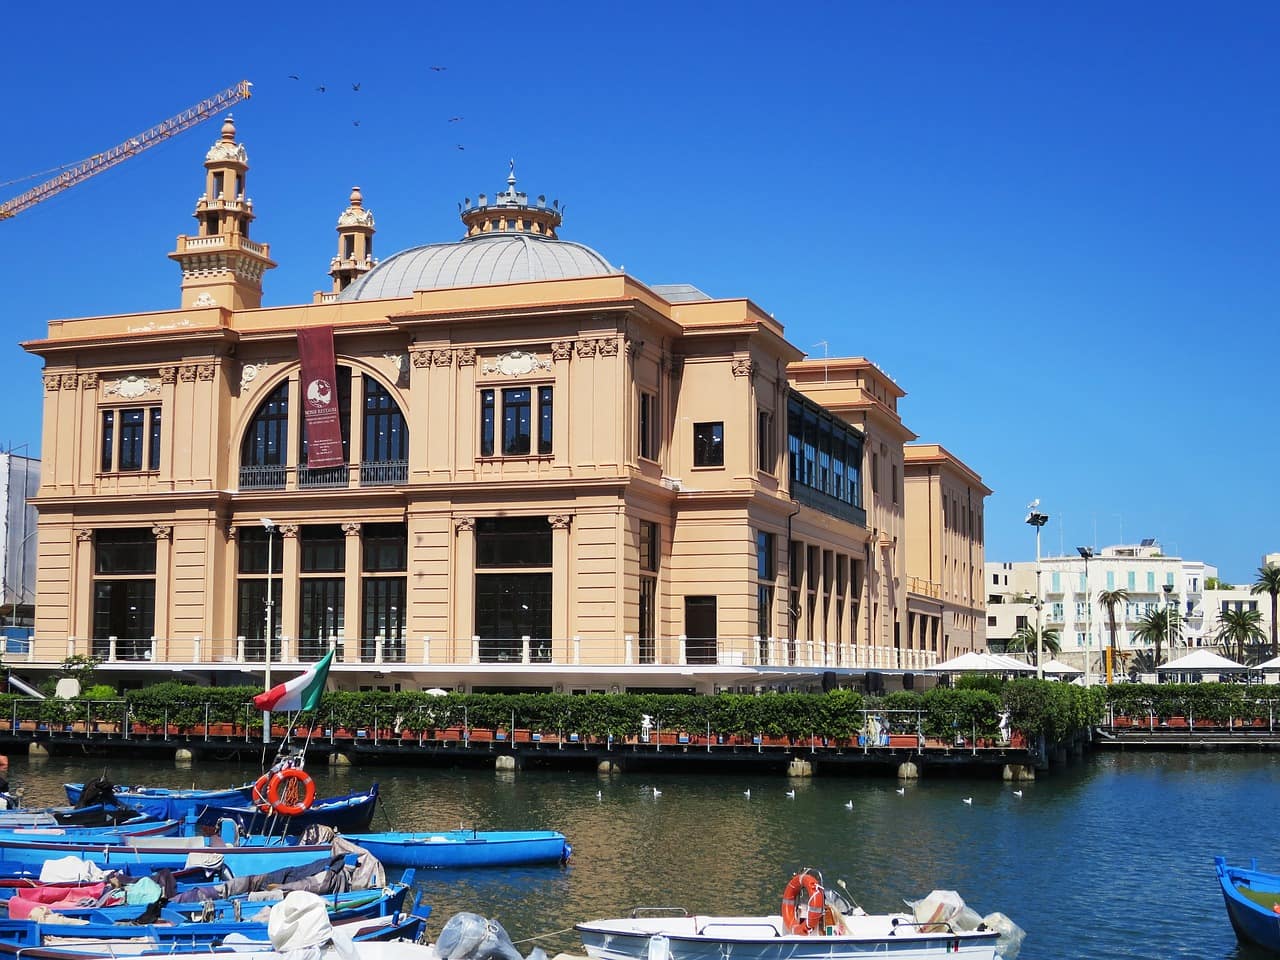 Bari, main city of Puglia